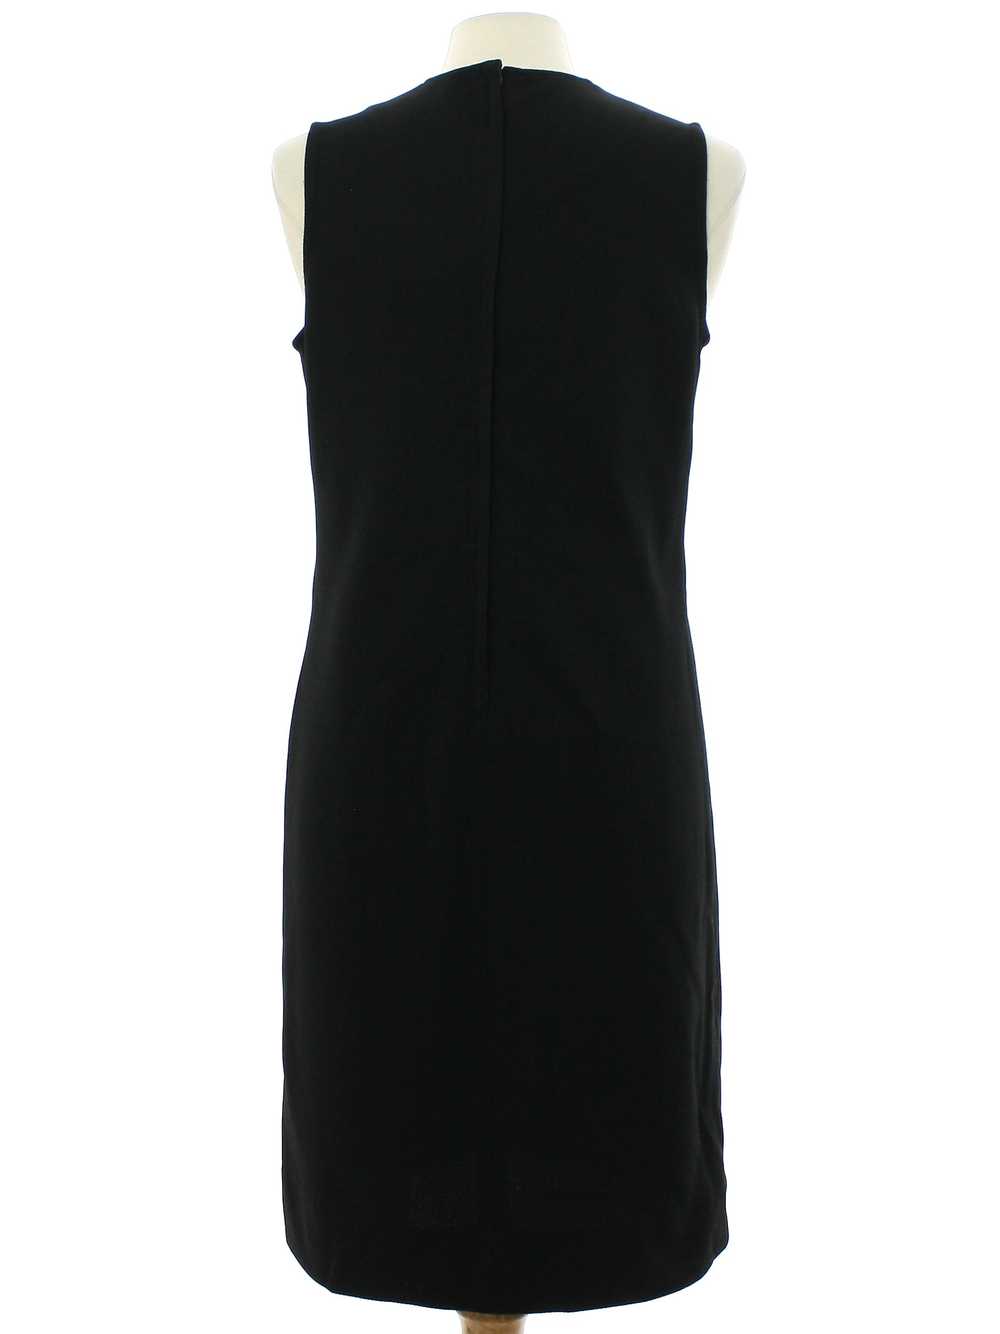 1960's Mod Little Black Dress - image 3